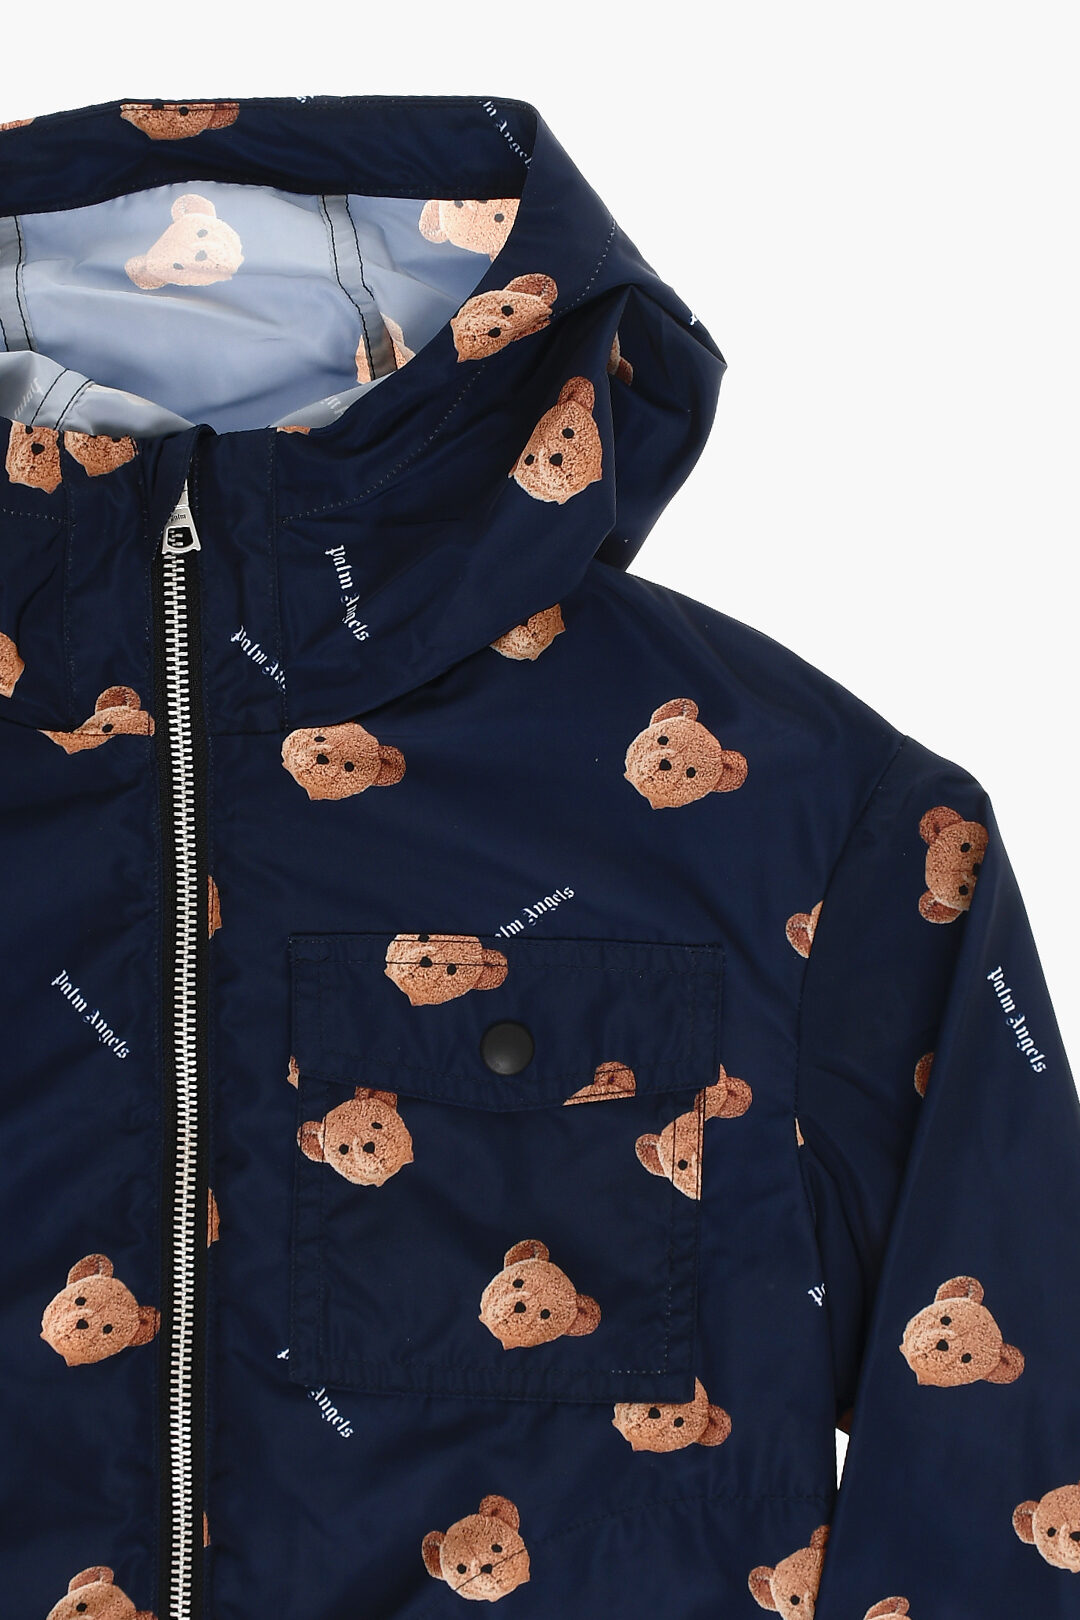 https://data.glamood.com/imgprodotto/all-over-teddy-bear-printed-windbreaker-jacket_1362734_zoom.jpg